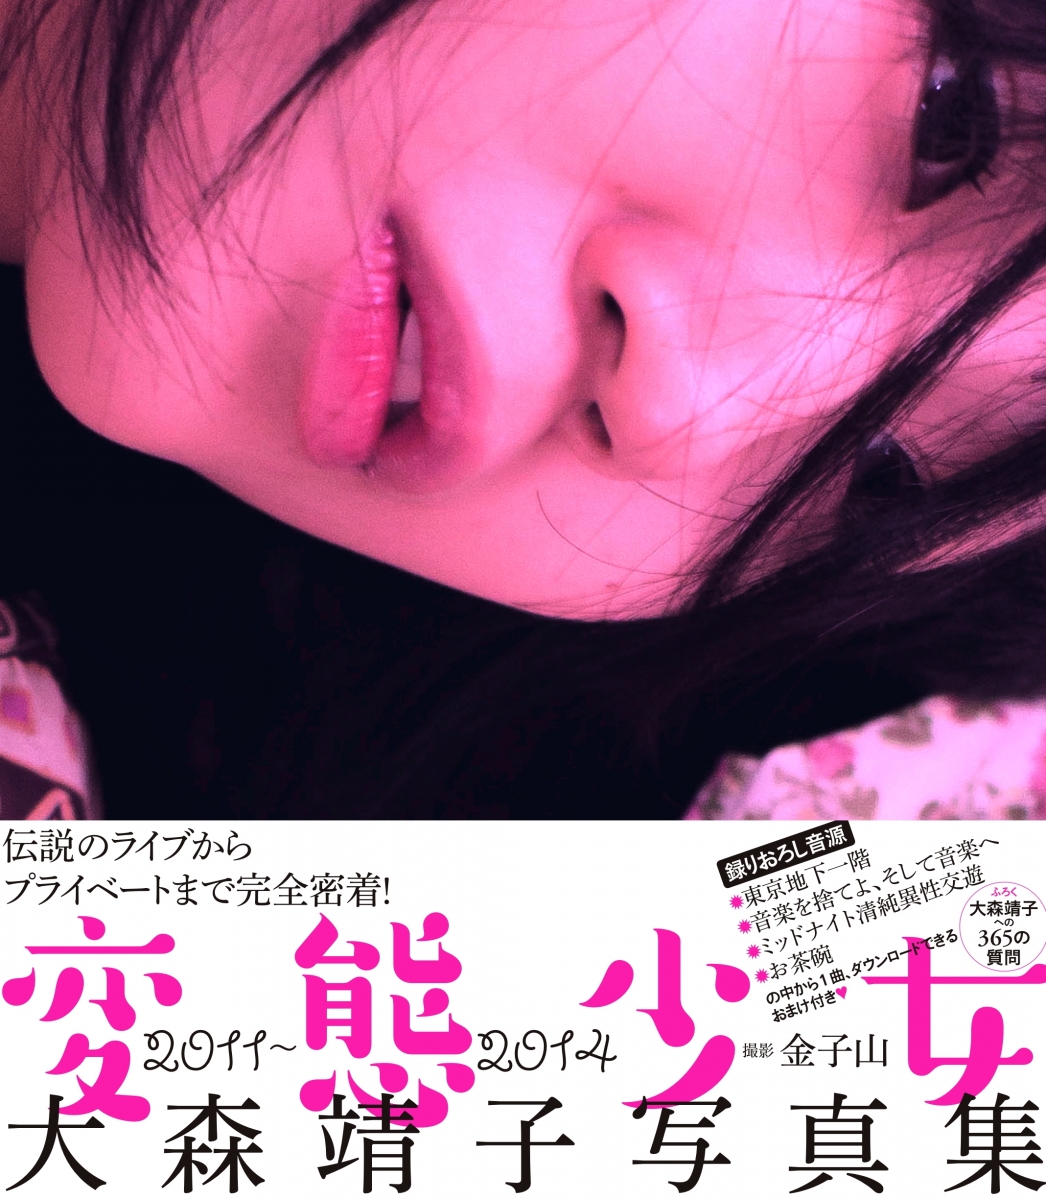 Seiko Omori’s “Hentai Shojo” Documentary Photobook Showing Her Metamporphosis to Be Released